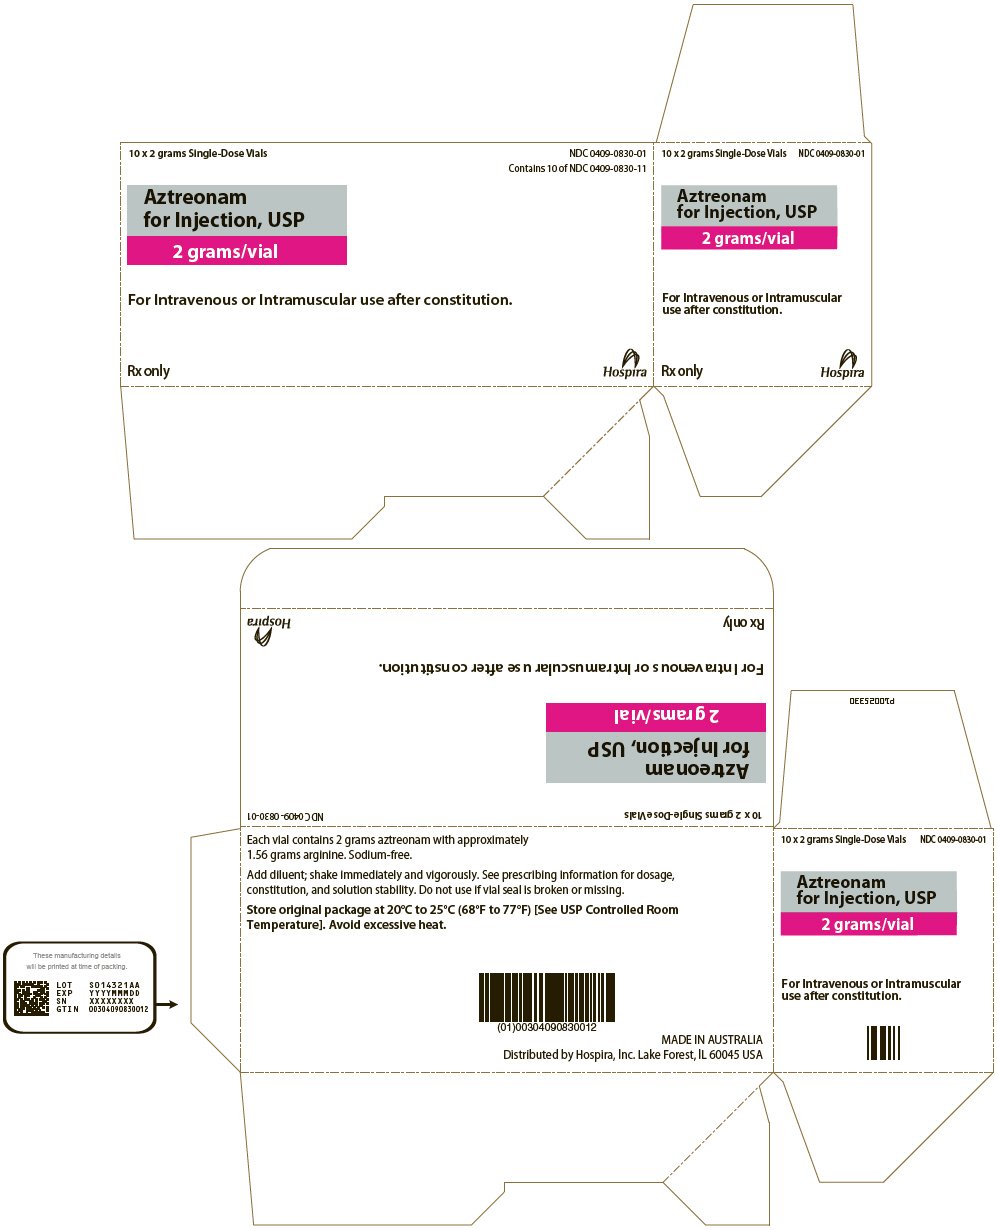 PRINCIPAL DISPLAY PANEL - 2 gram Vial Carton